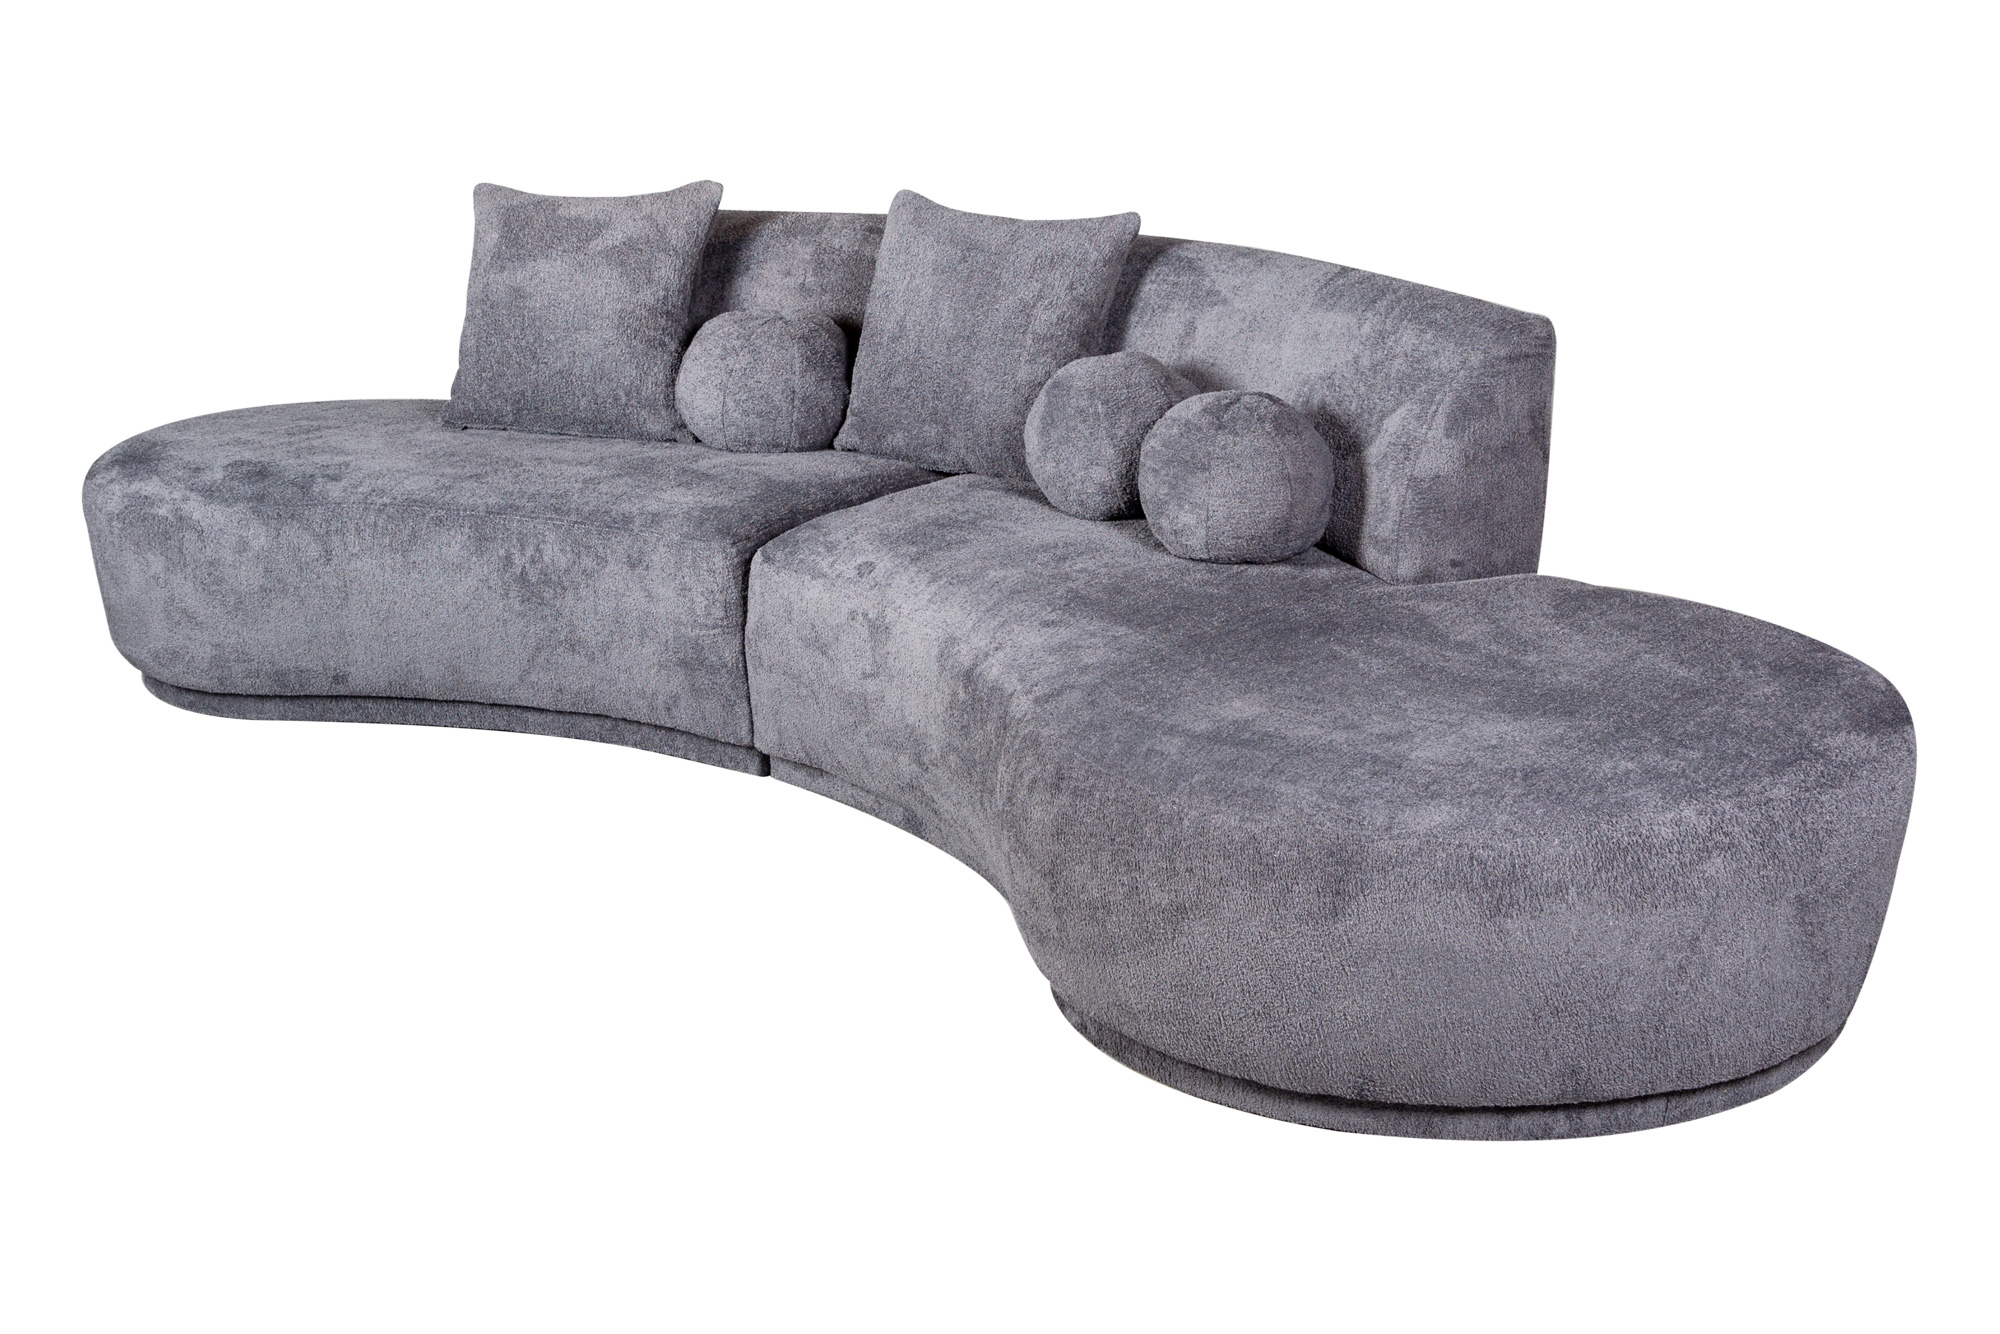 Hermes 4-Seater Sofa